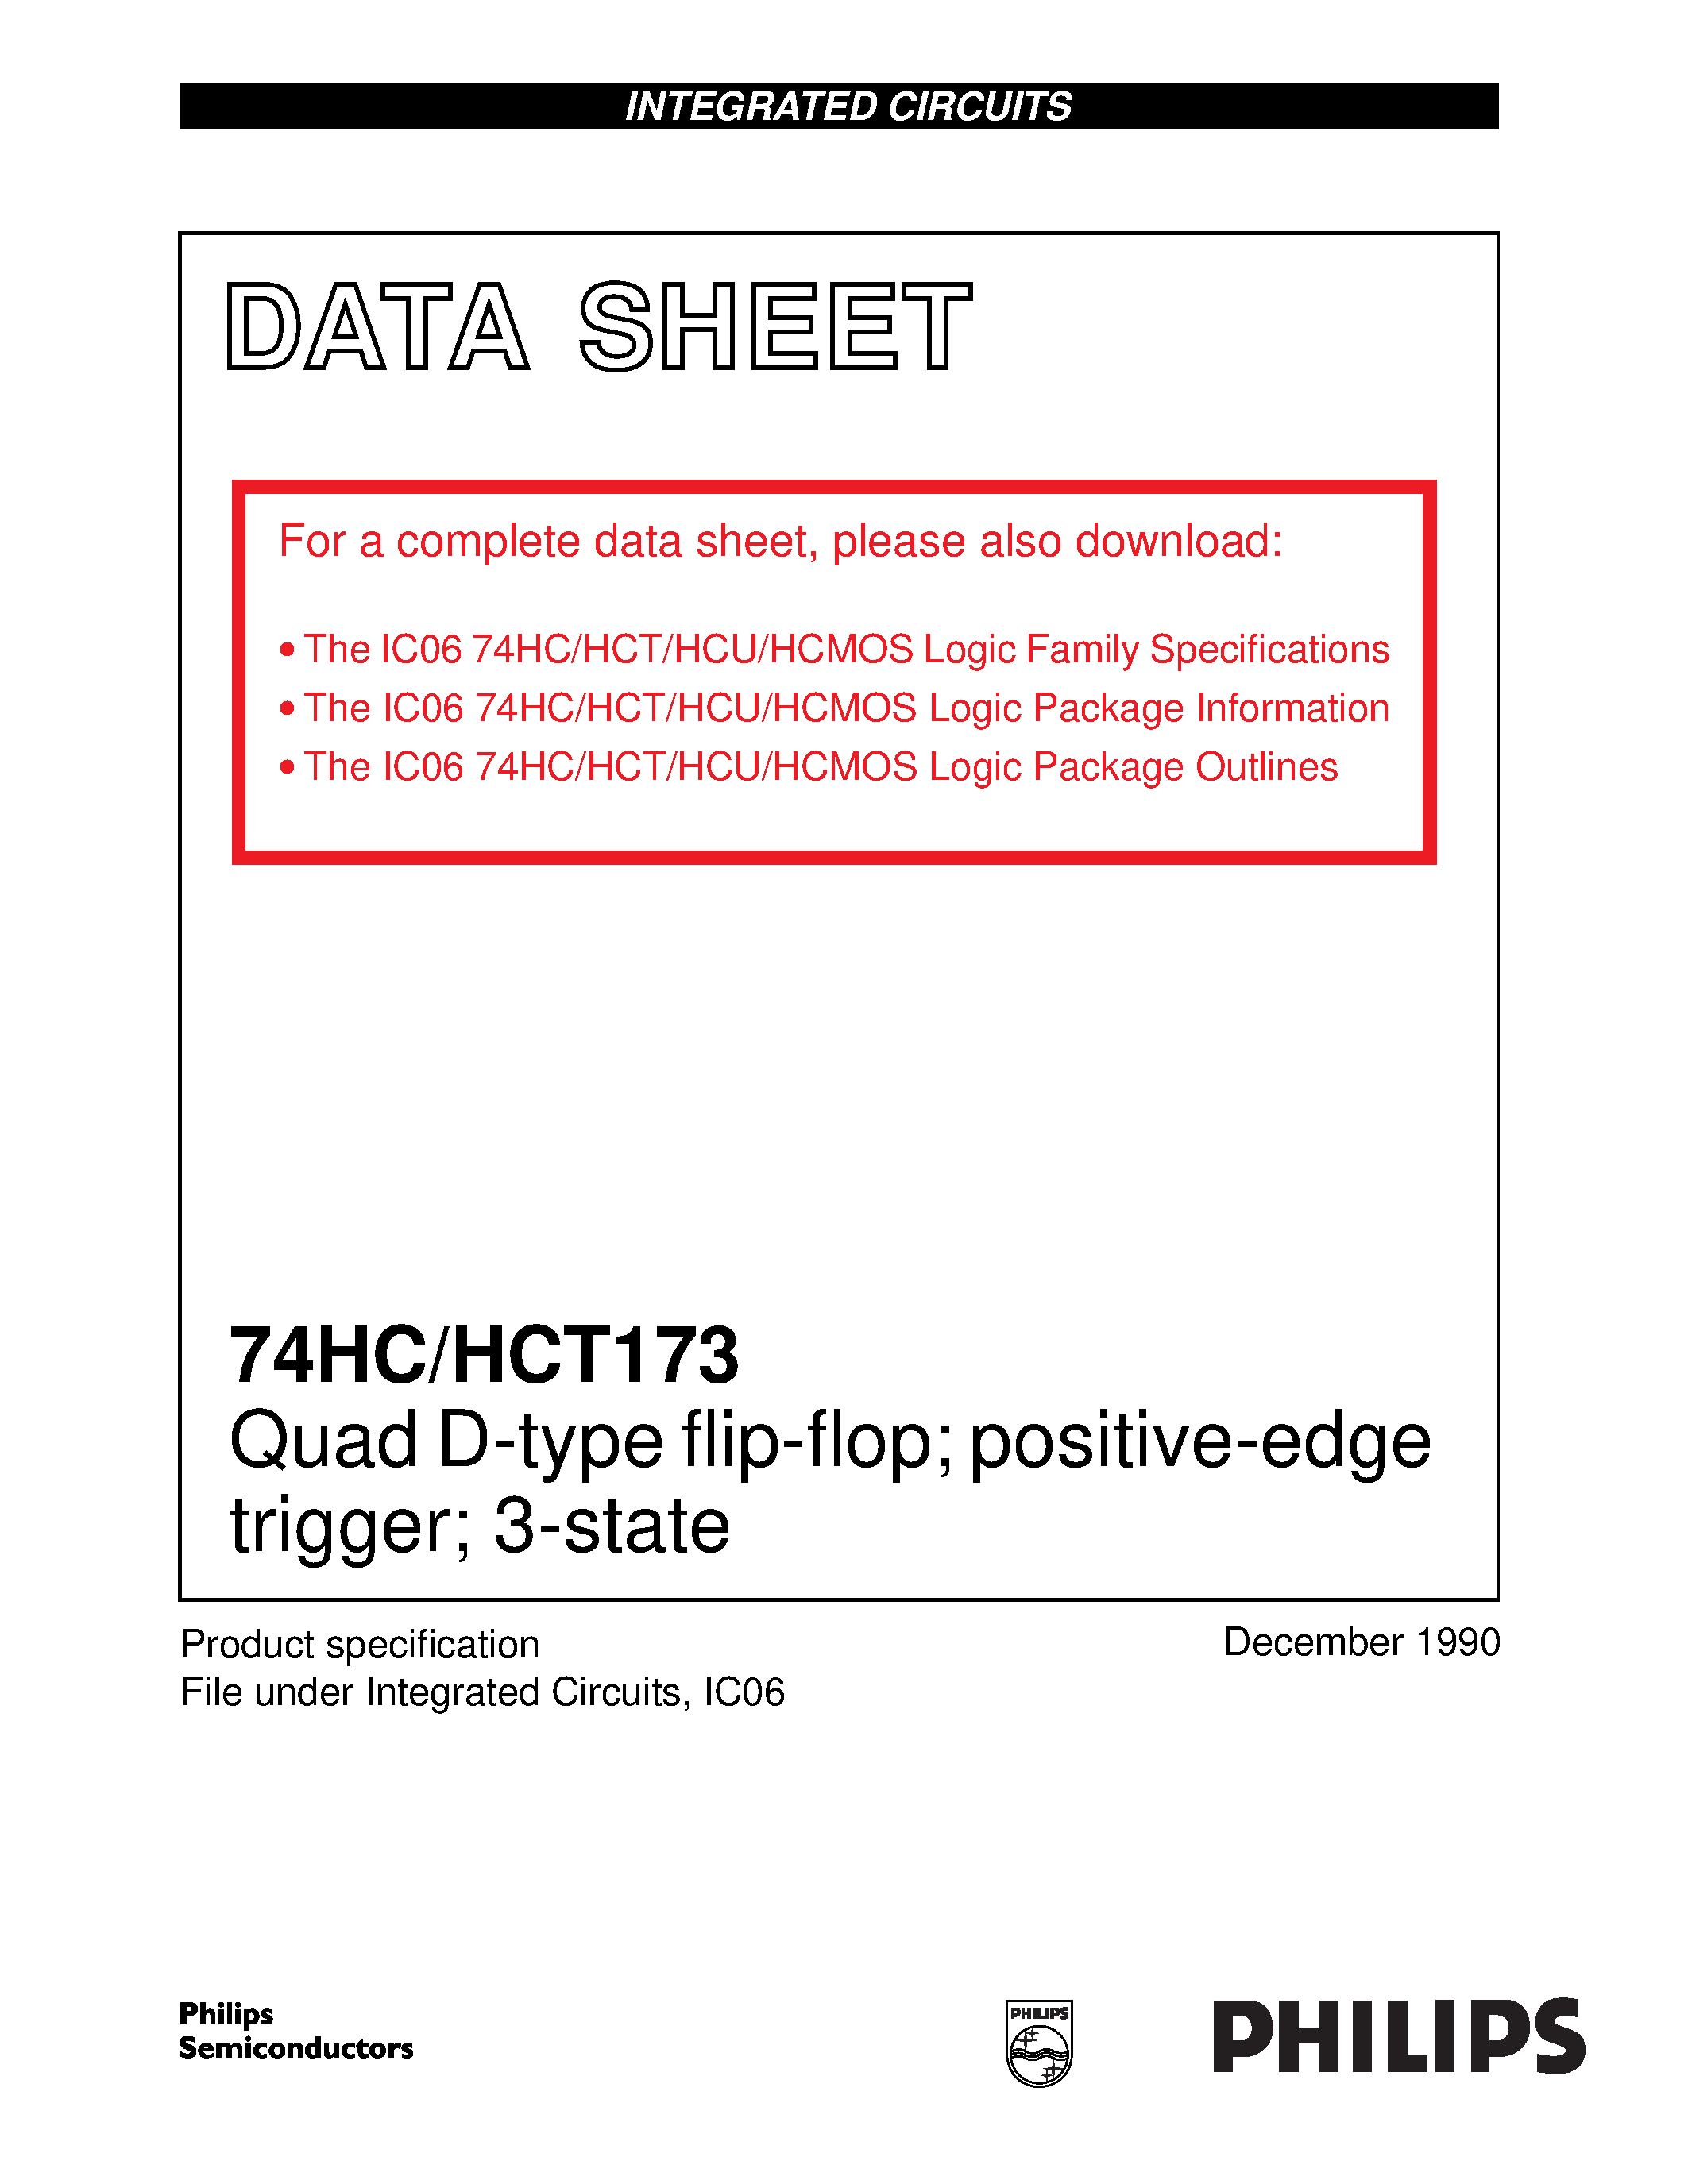 Datasheet 74HCT173 - Quad D-type flip-flop; positive-edge trigger; 3-state page 1